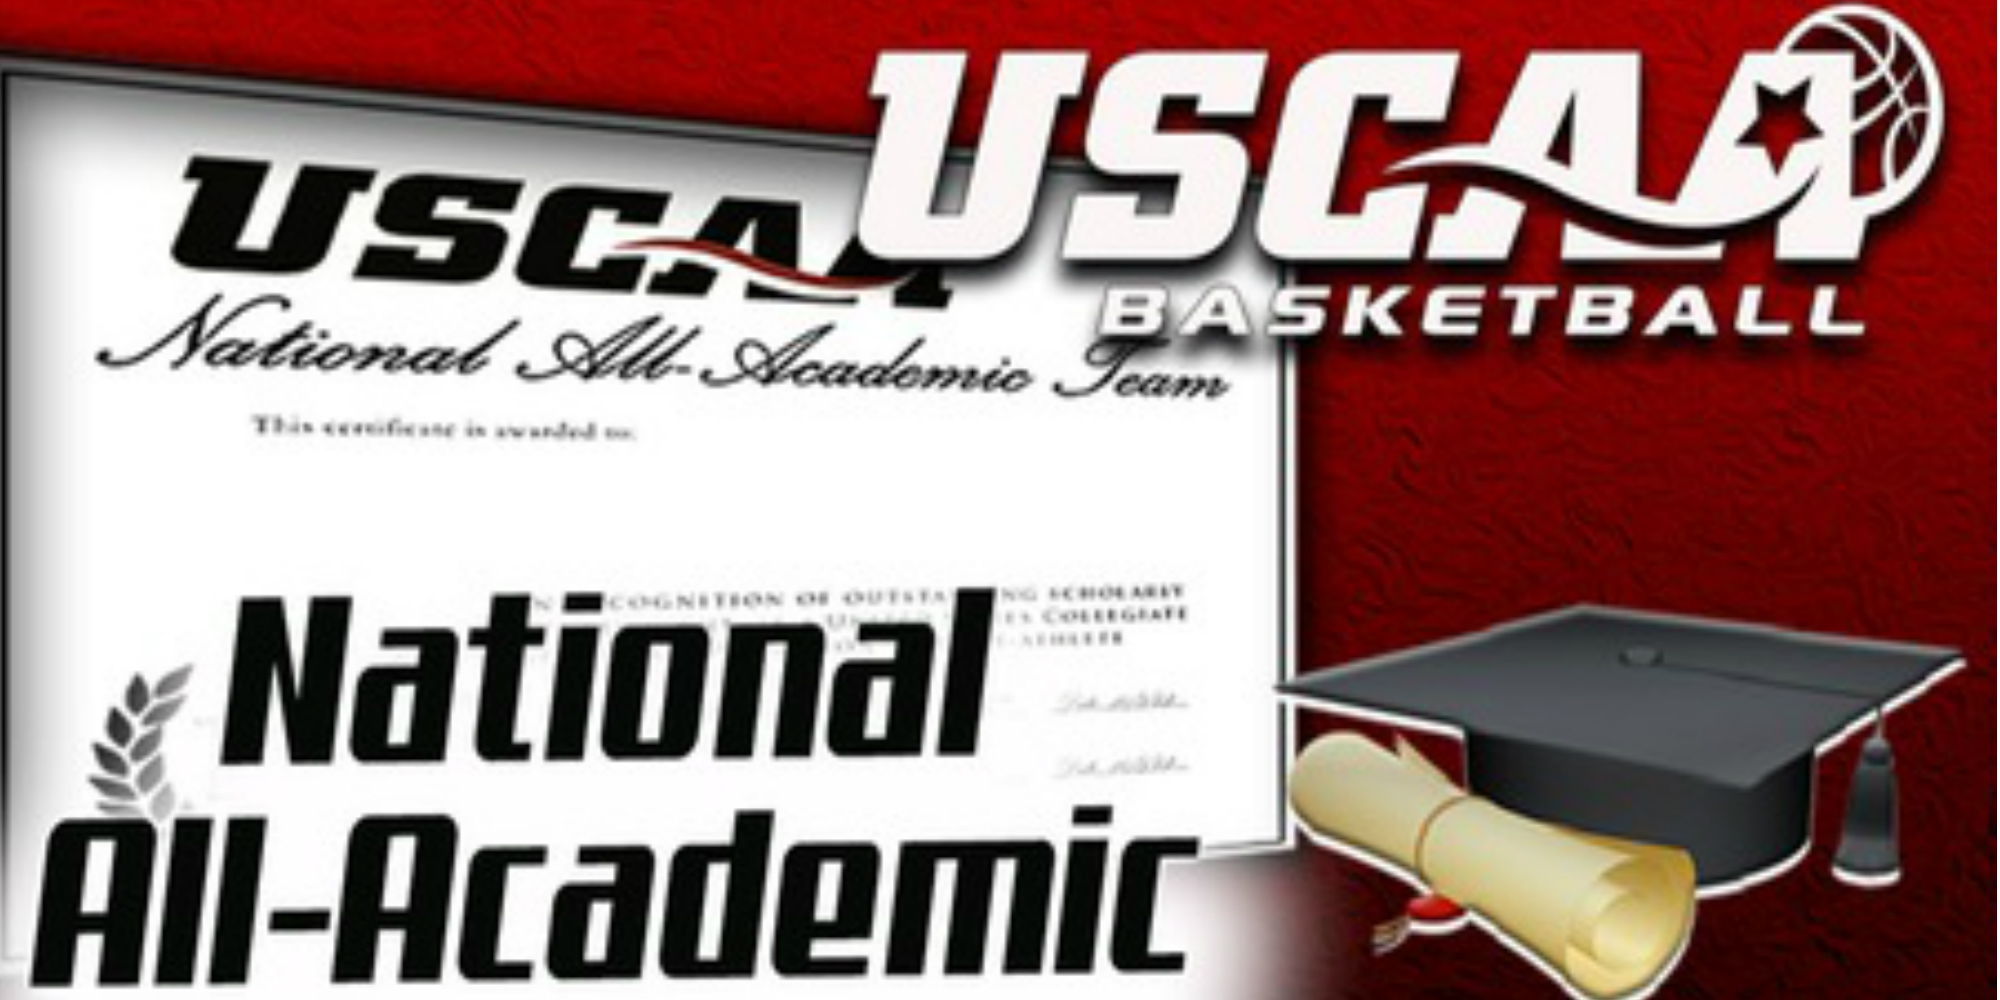 Norton and Nunn Garner USCAA National All-Academic Team Honors